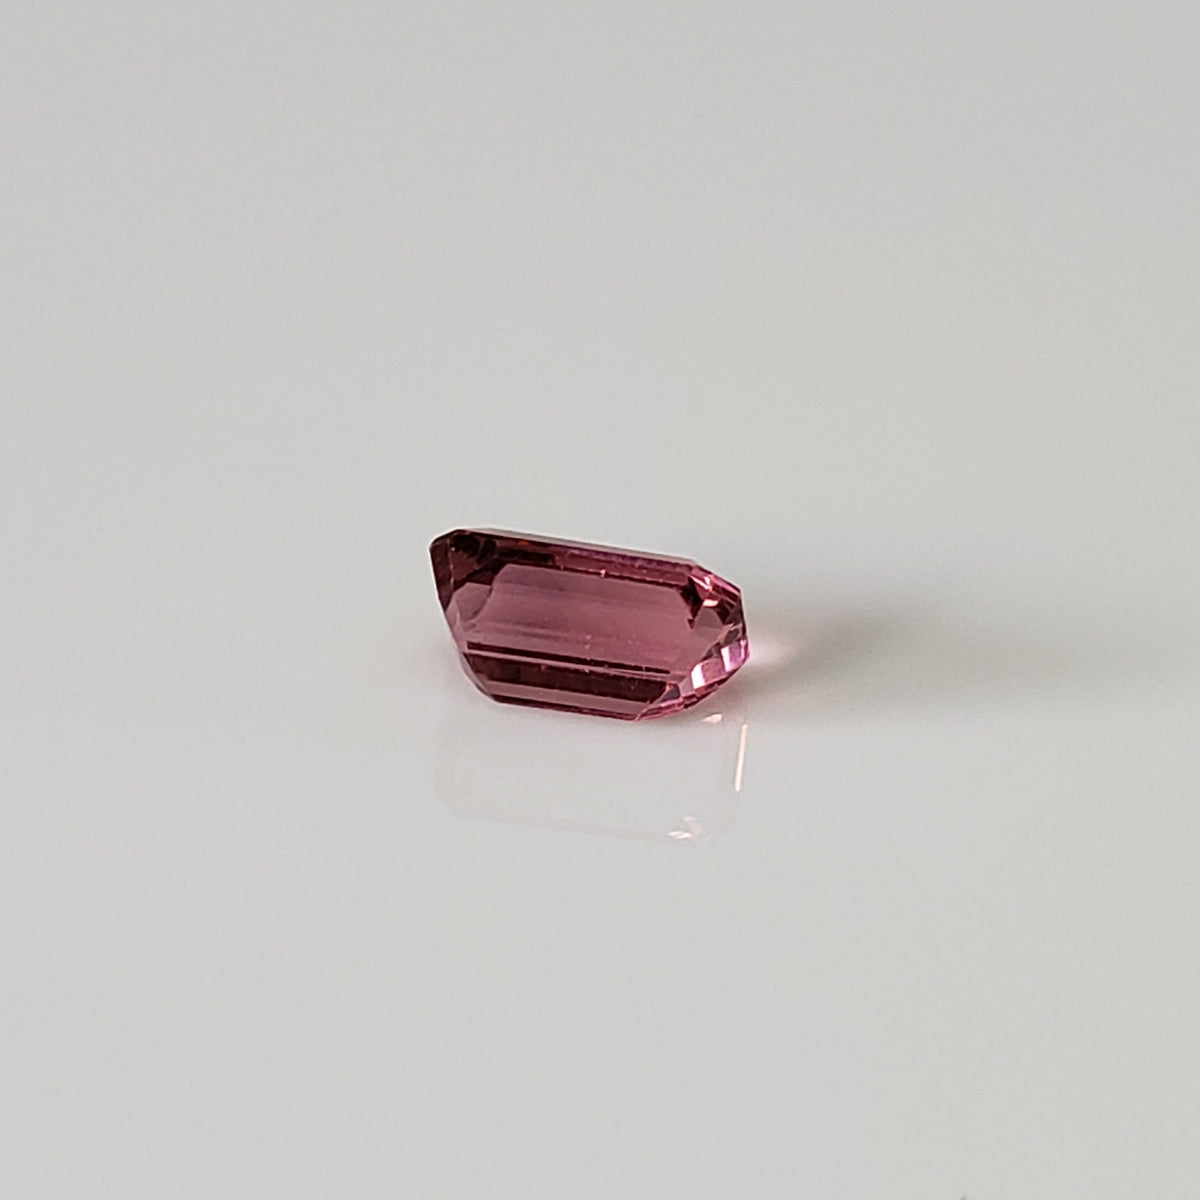 Tourmaline | Octagon Cut | Pink | 7x4mm 0.9ct